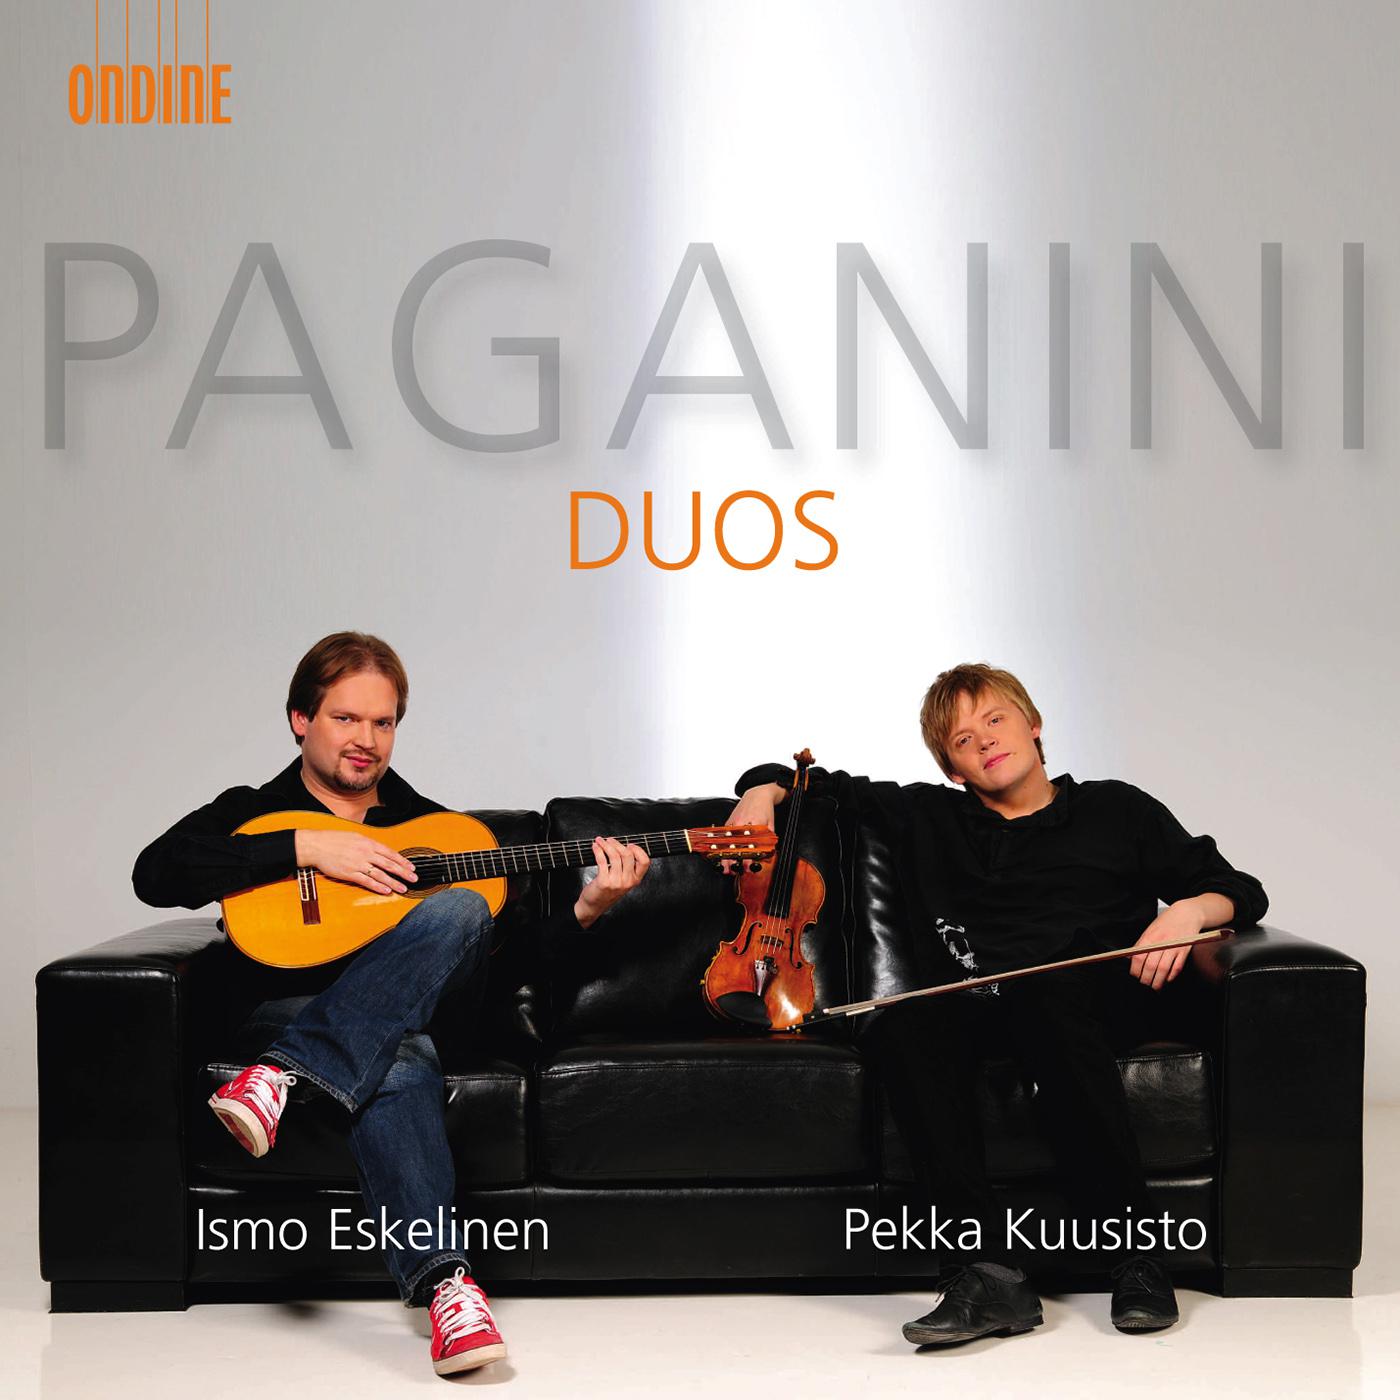 Pekka Kuusisto - Sonata concertata in A Major, Op. 61, MS 2:II. Adagio, assai espressivo